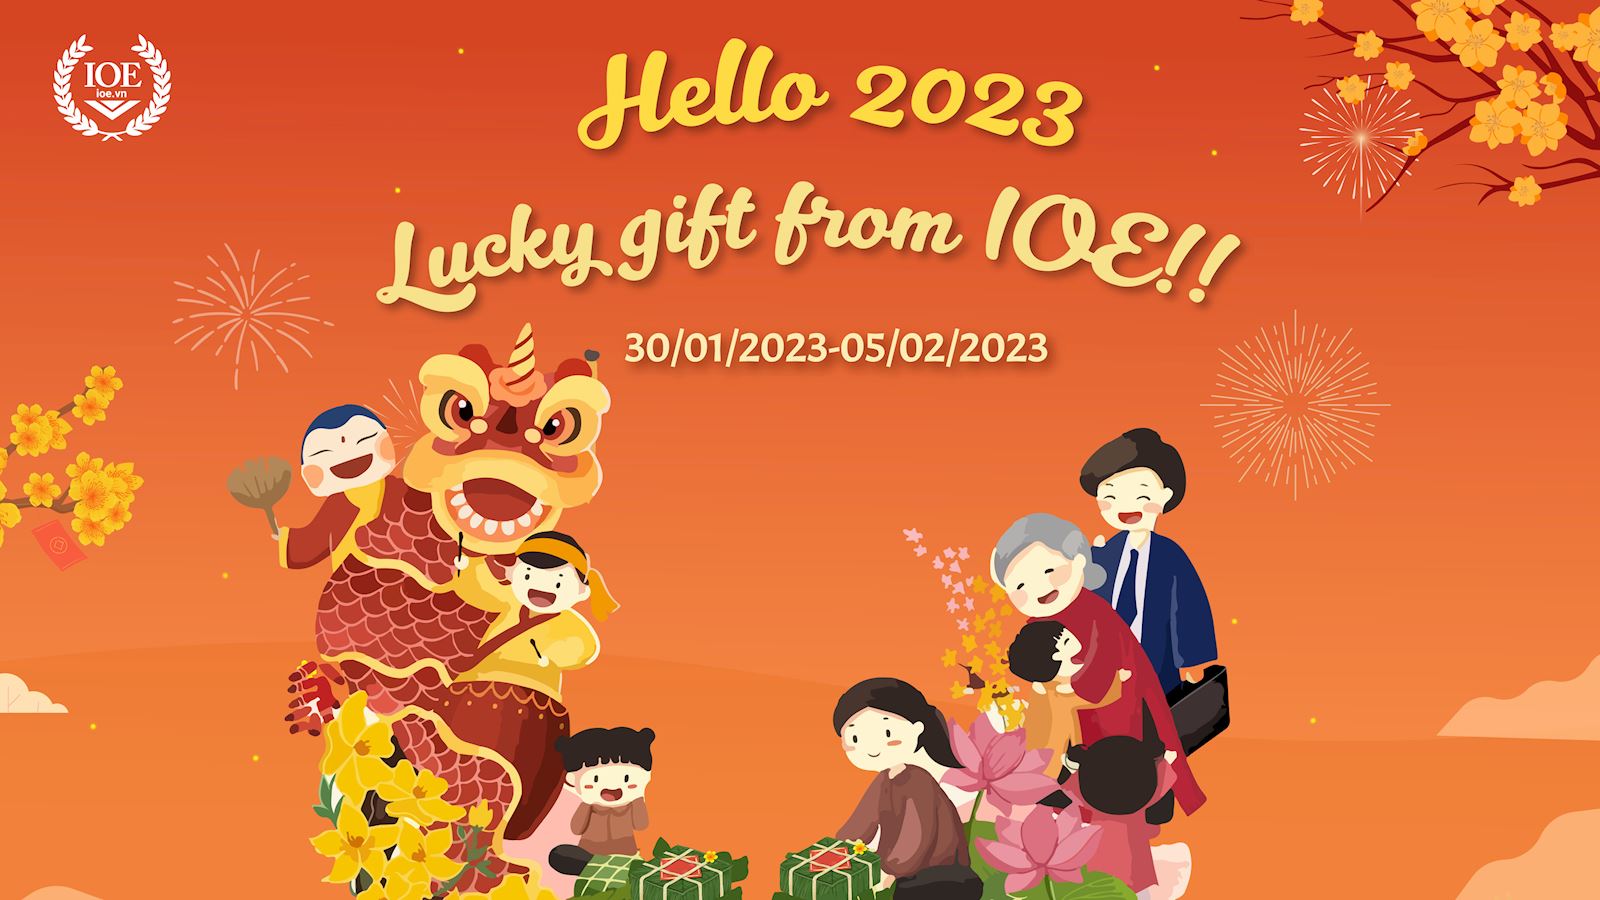 Hello 2023: Lucky gift from IOE!